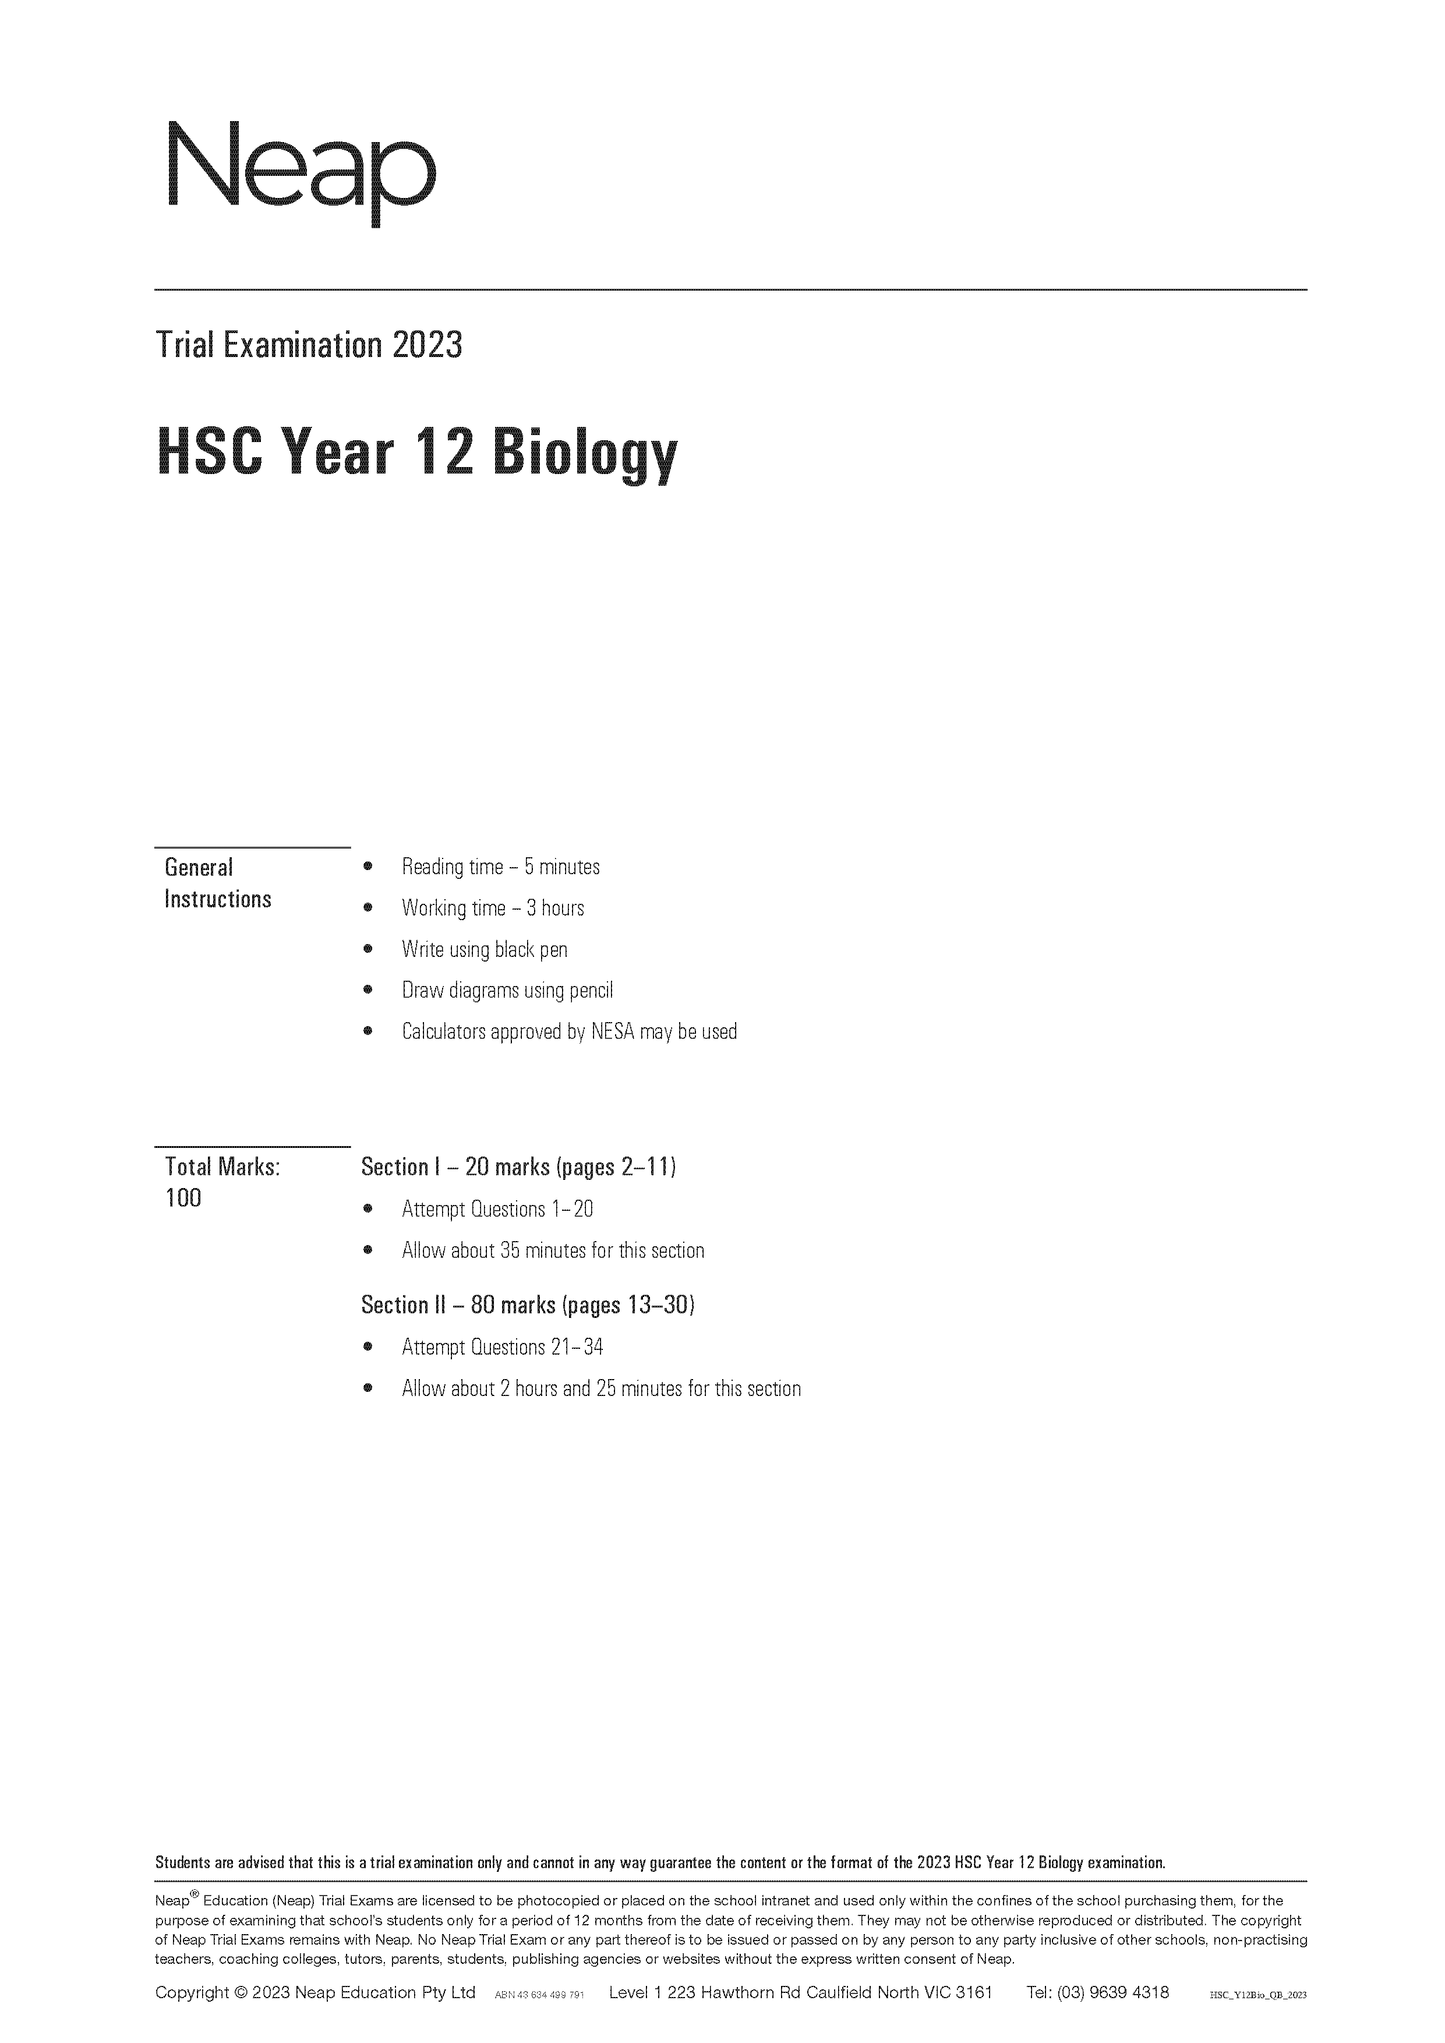 Neap Trial Exam: 2023 HSC Year 12 Biology